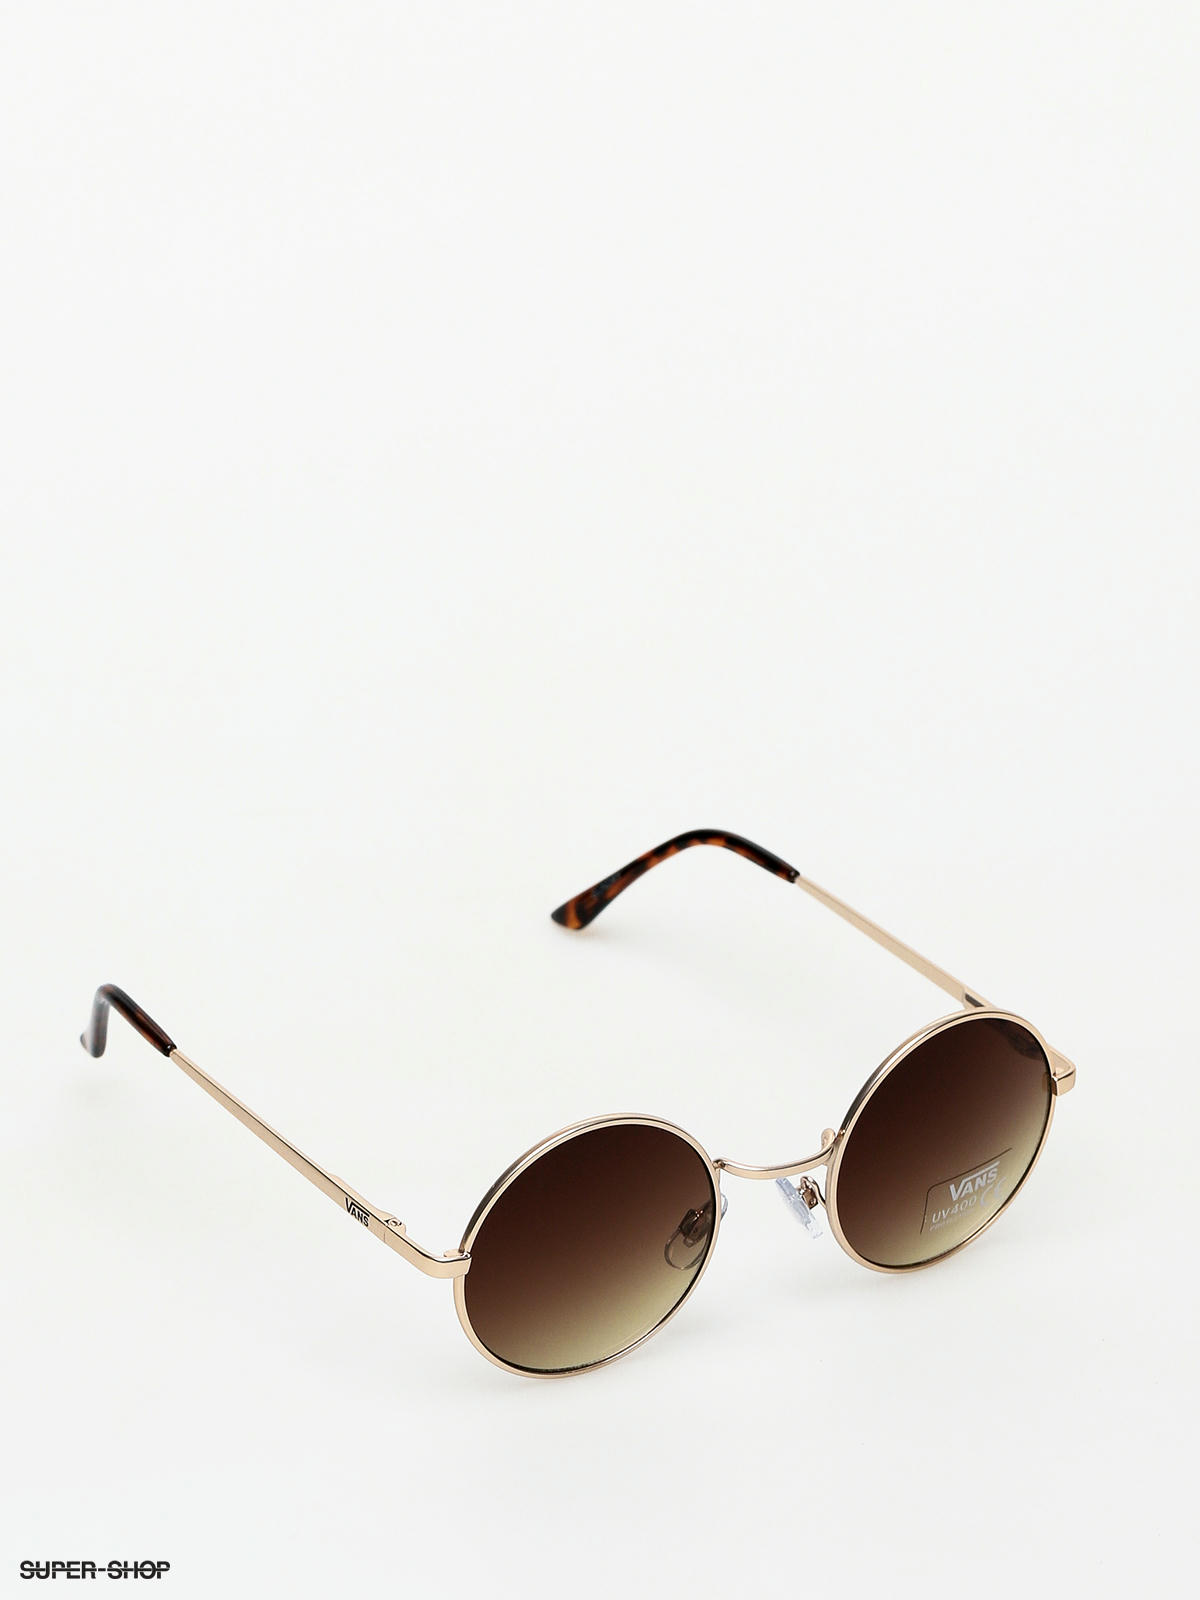 Vans Gundry Sunglasses (gold/brown)